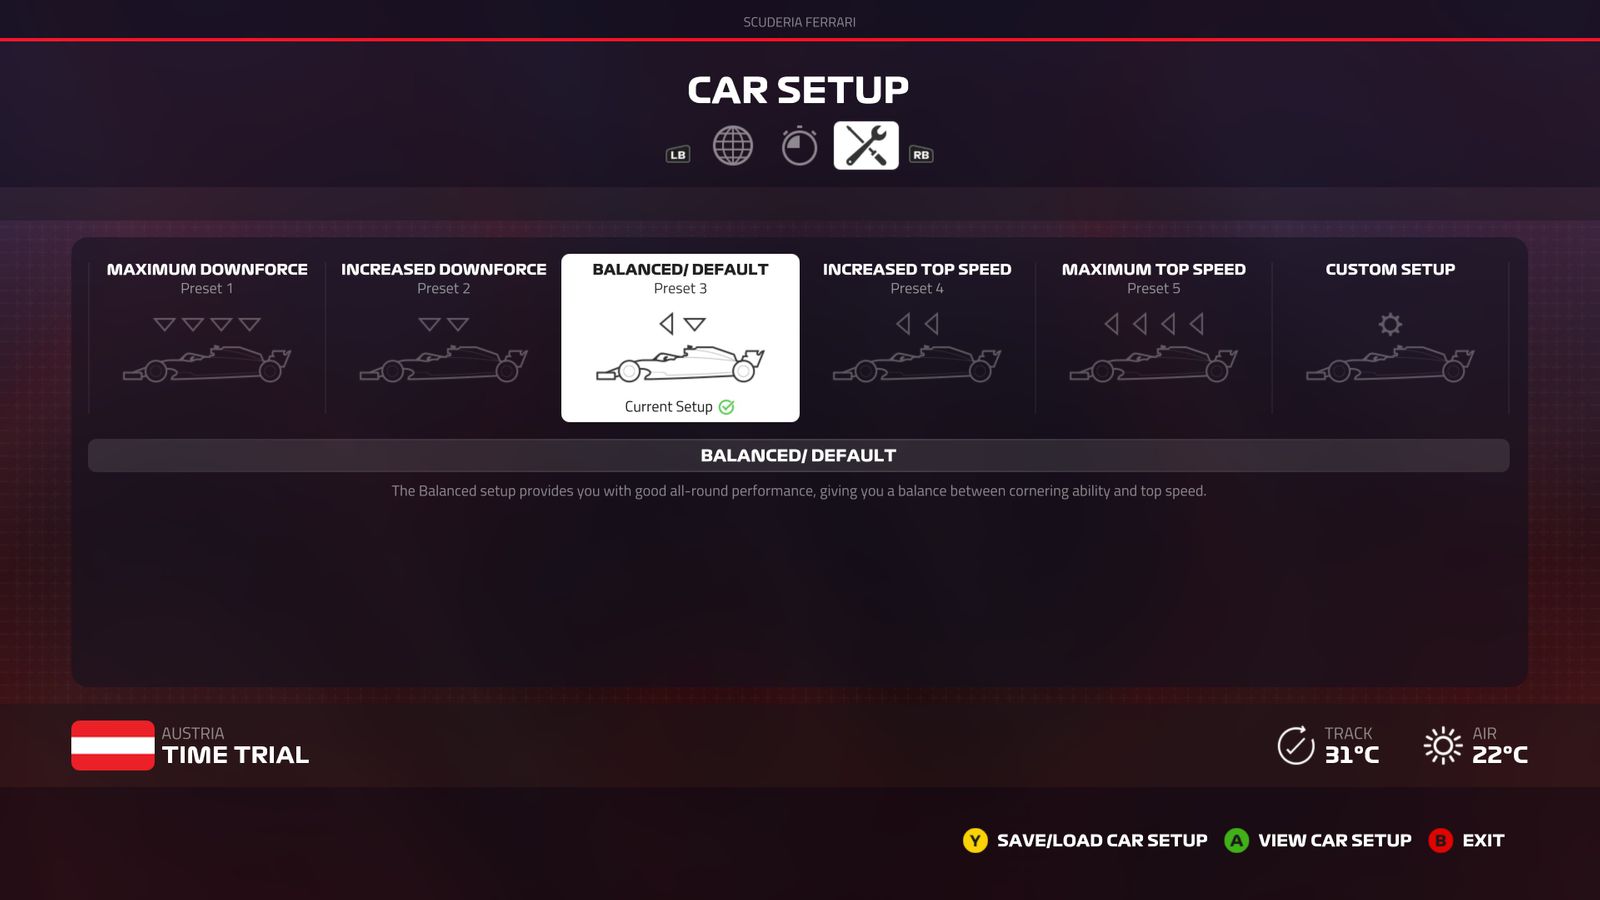 F1 Game: Meistere jede Strecke mit Community Setups